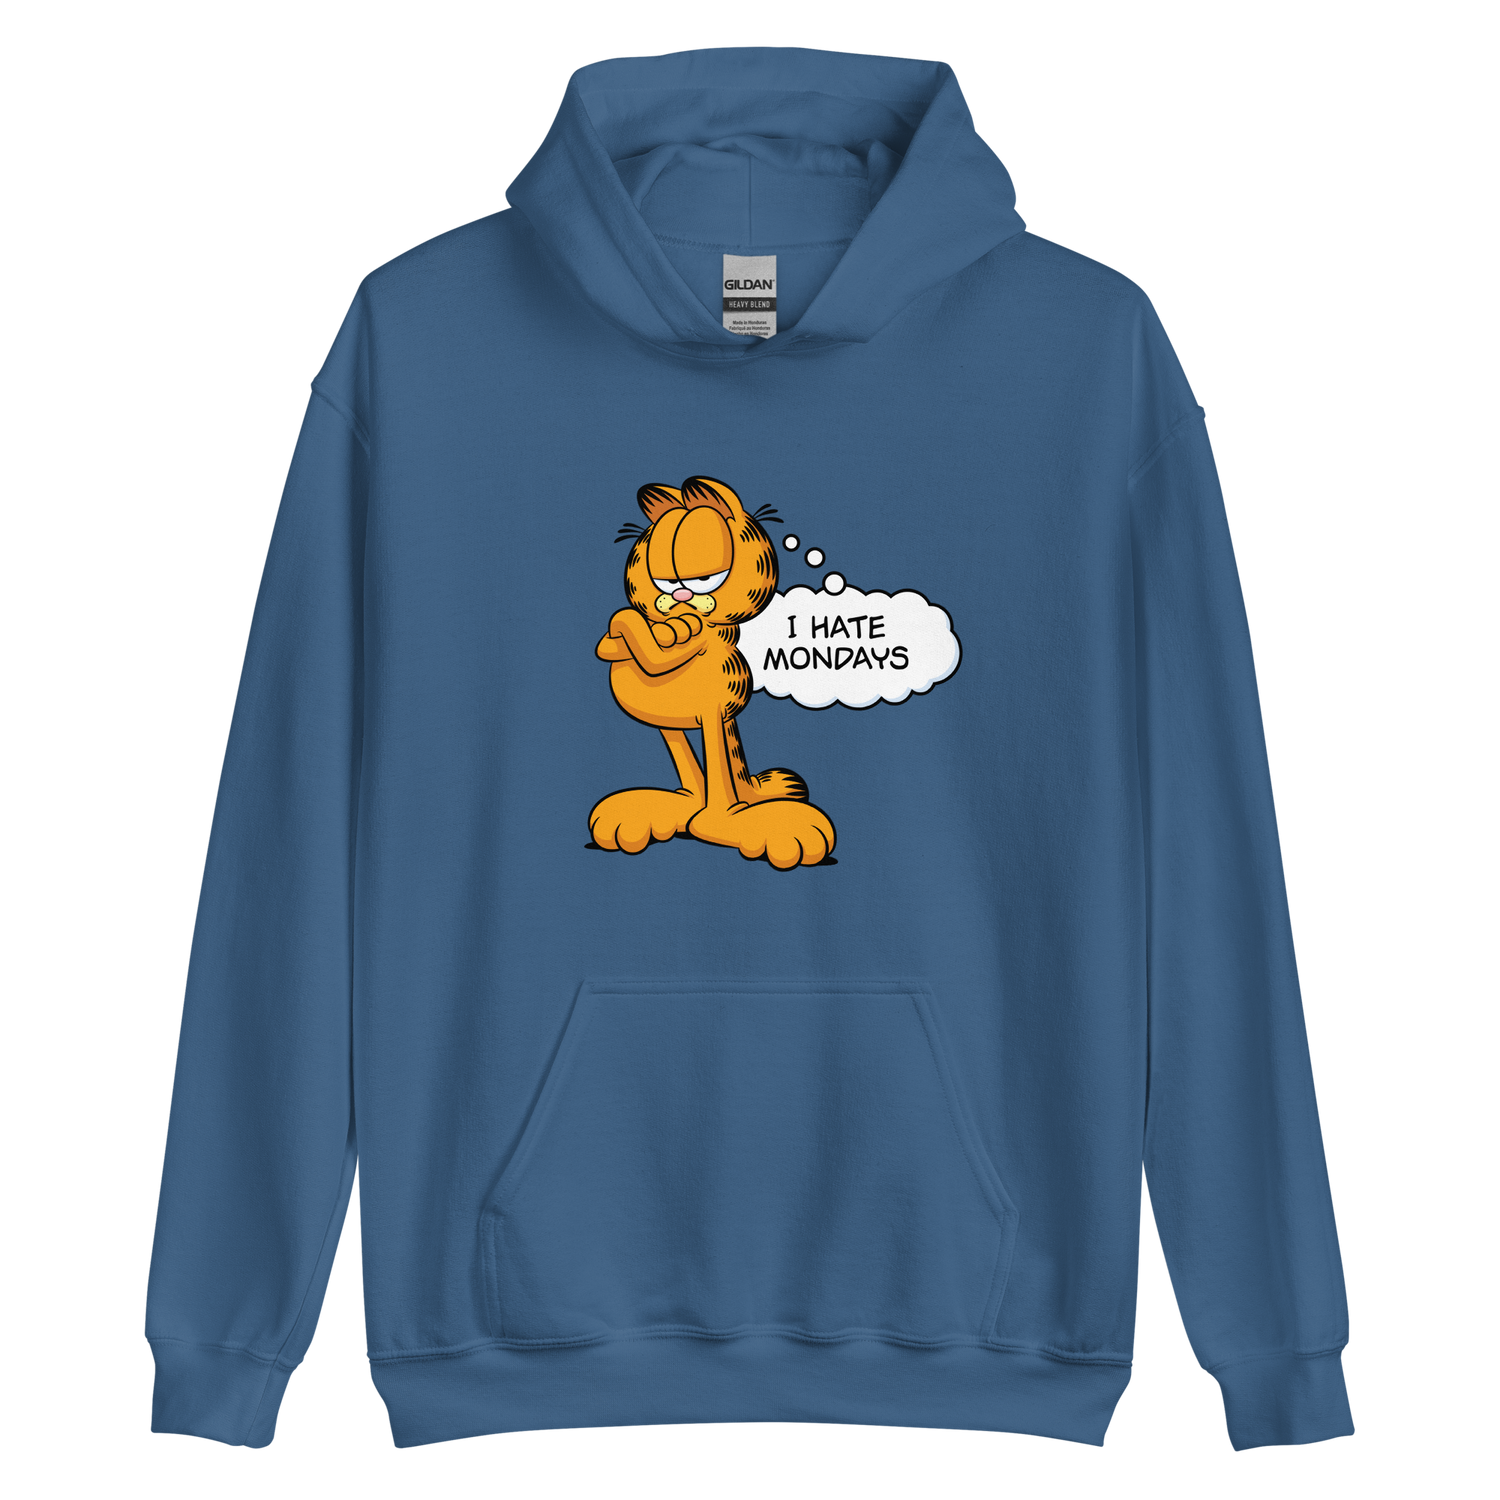 Garfield Stripes Unisex Joggers – Paramount Shop